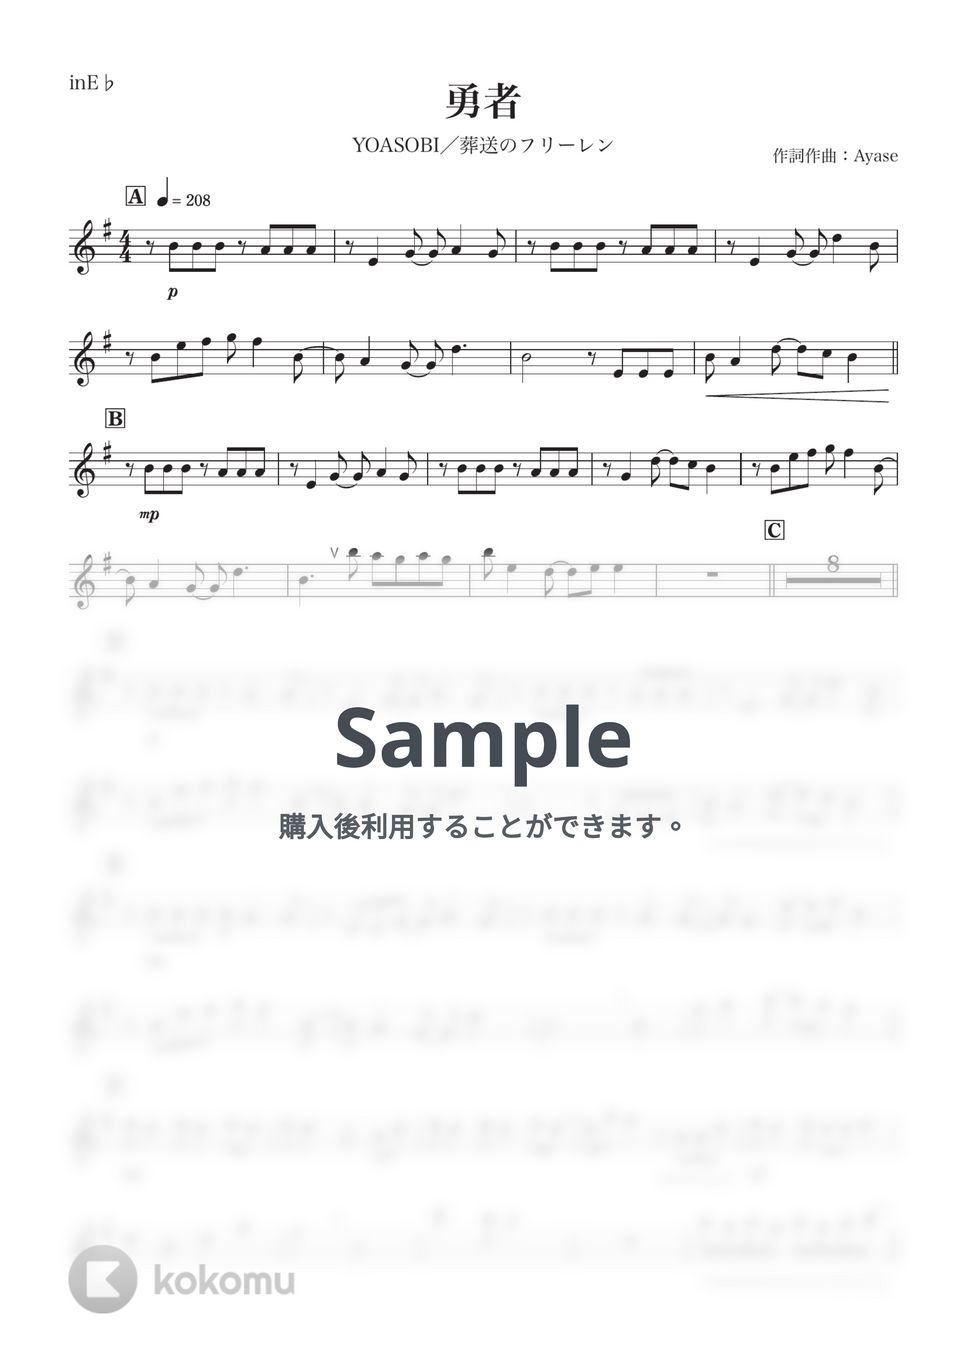 YOASOBI - 【葬送のフリーレン】勇者 (E♭) by kanamusic